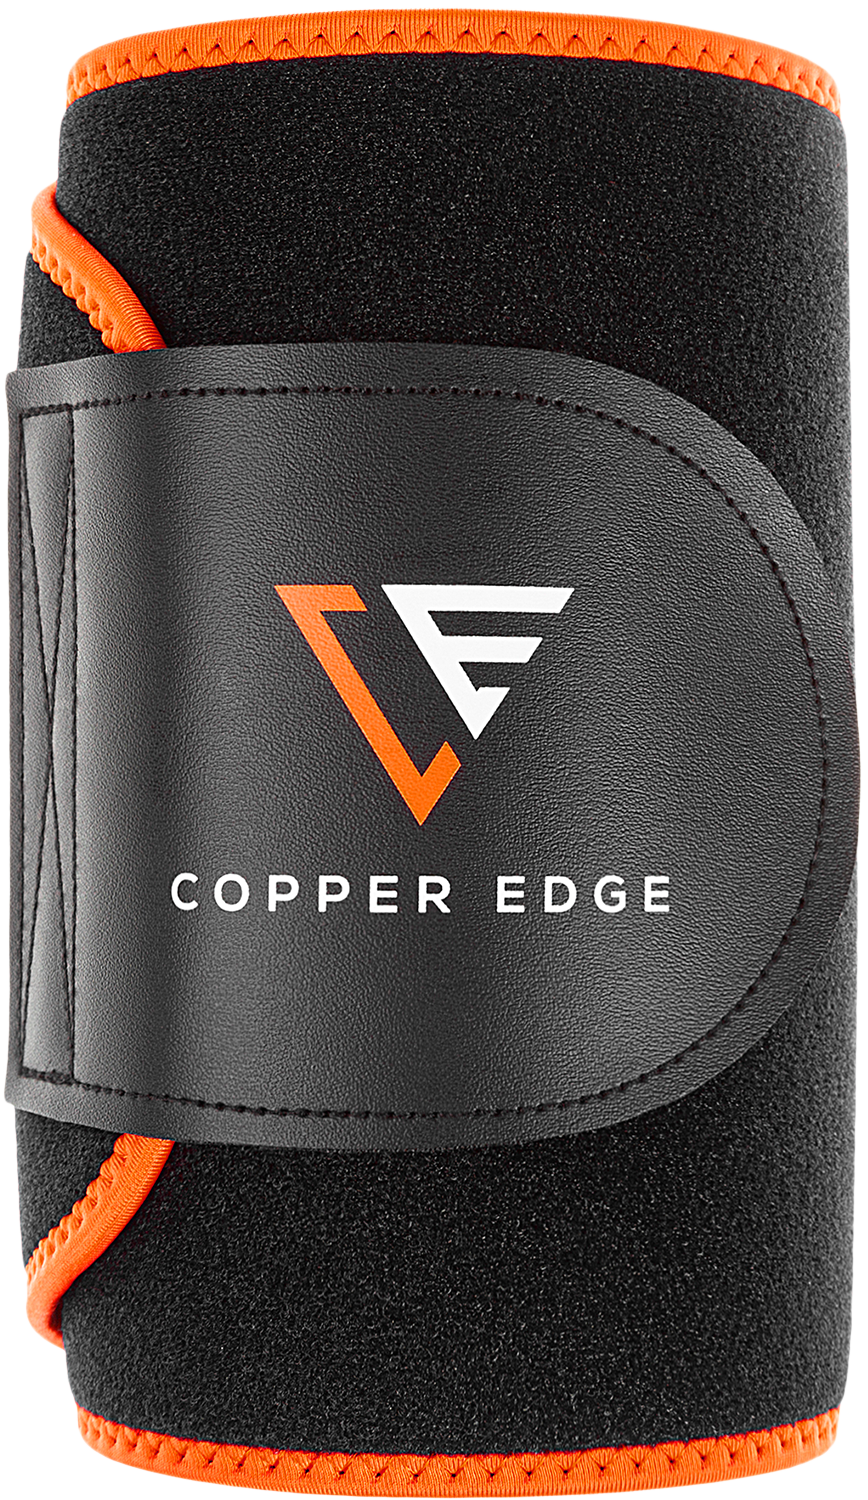  Copper Edge Sweat Waist Trimmer Trainer Belt for Women